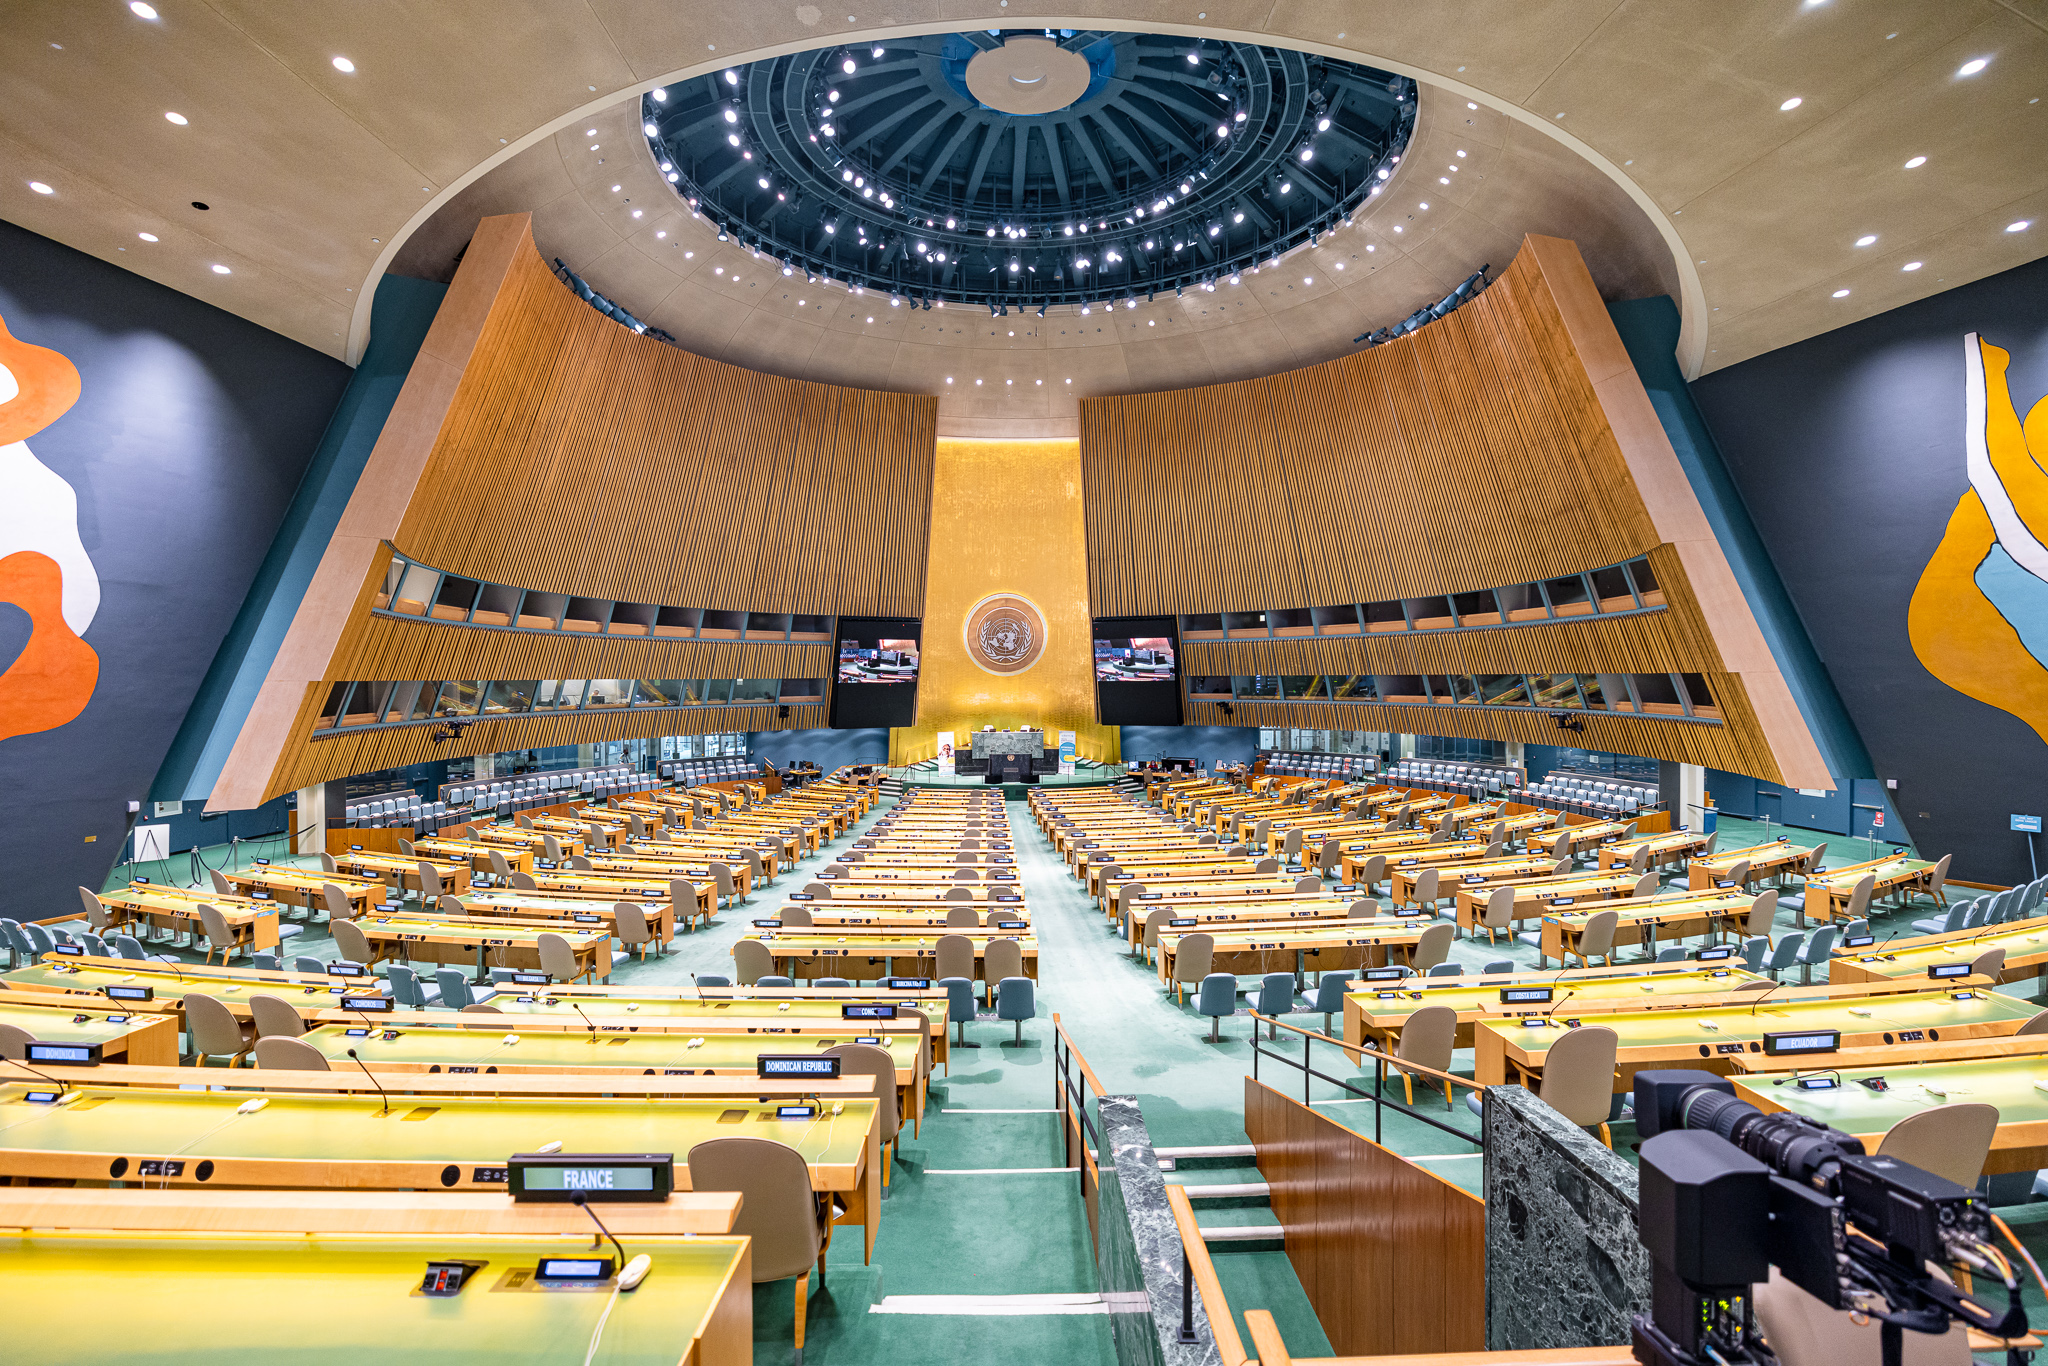 UN Security Council postpones vote to demand aid access for Gaza